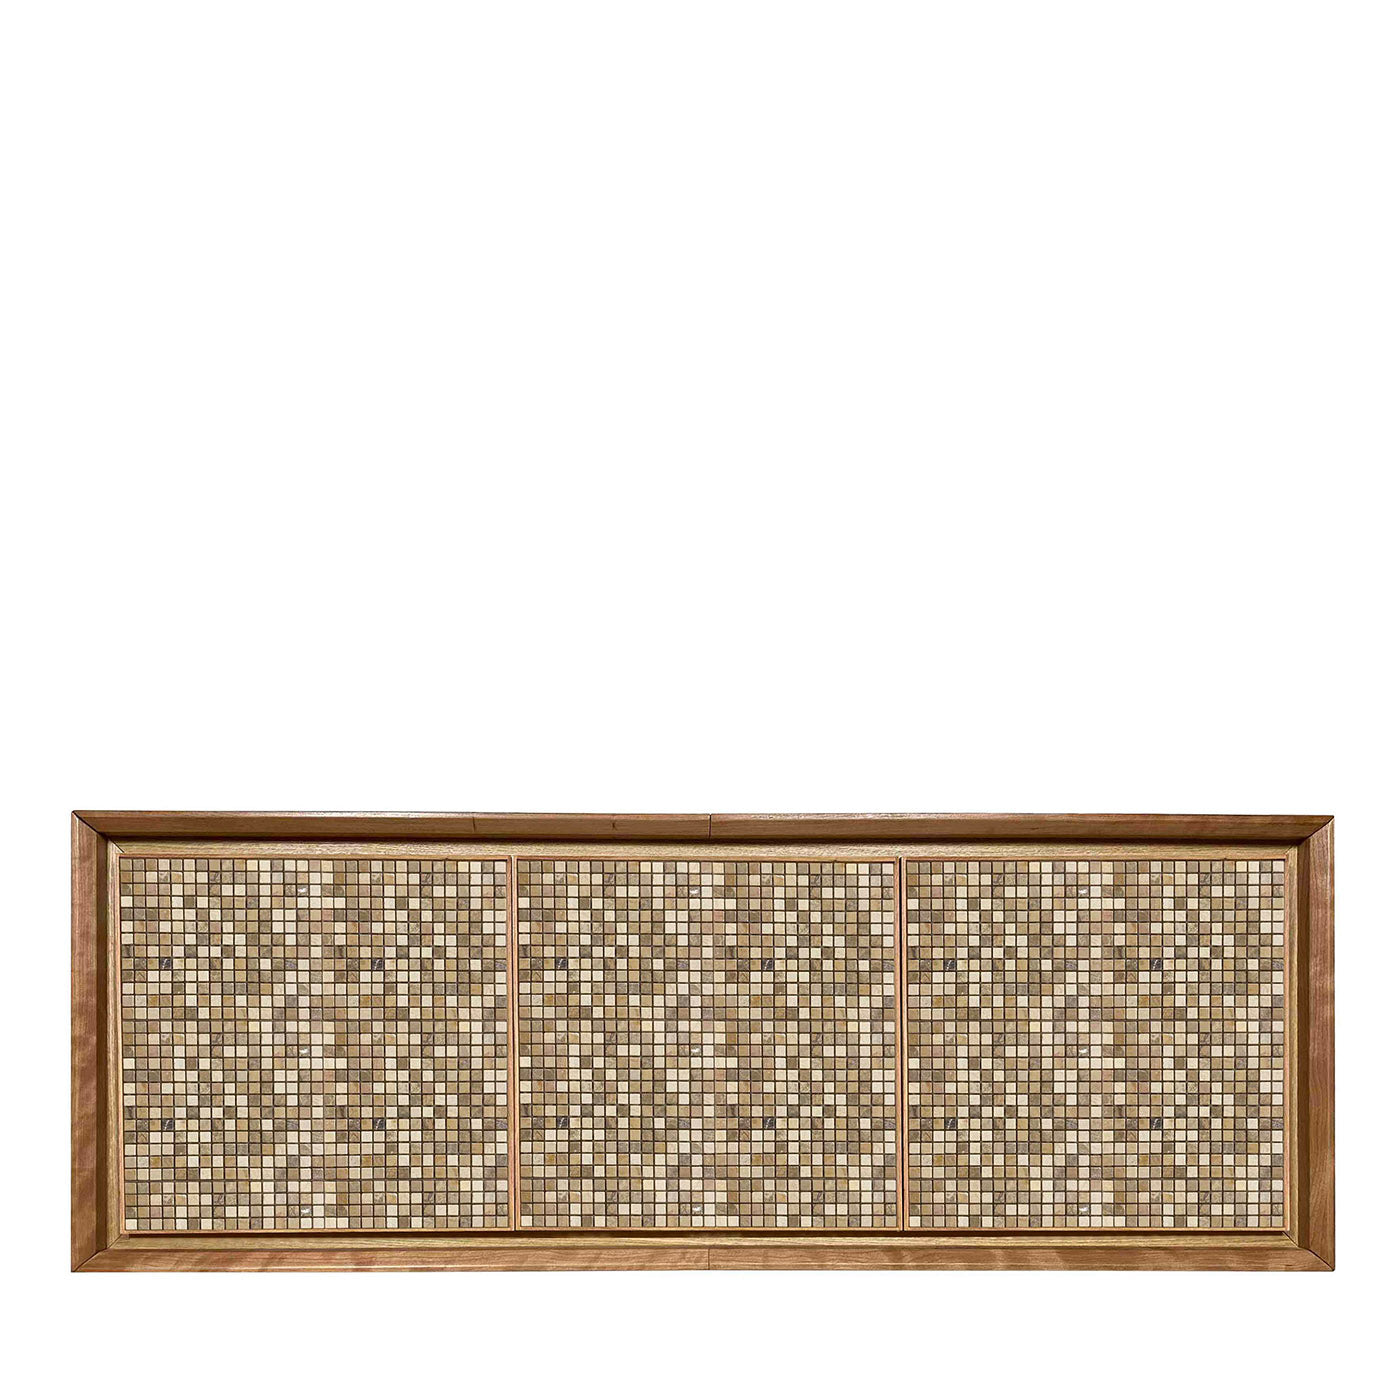 Mosaico Sideboard #1 by Mascia Meccani - Main view